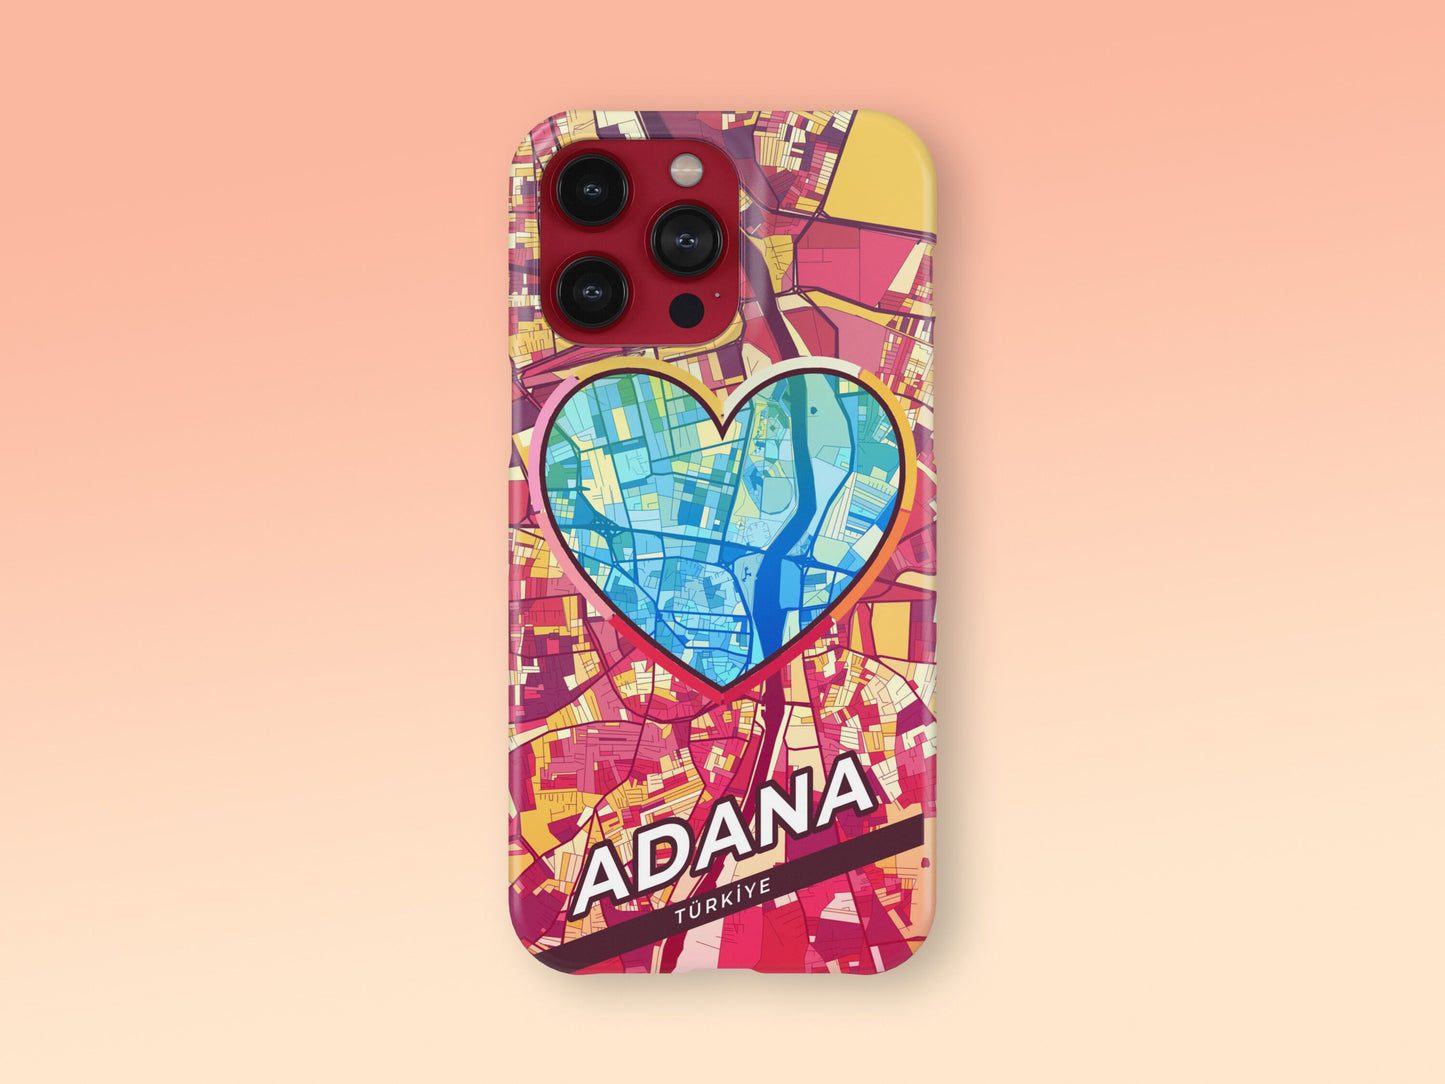 Adana Turkey slim phone case with colorful icon. Birthday, wedding or housewarming gift. Couple match cases. 2